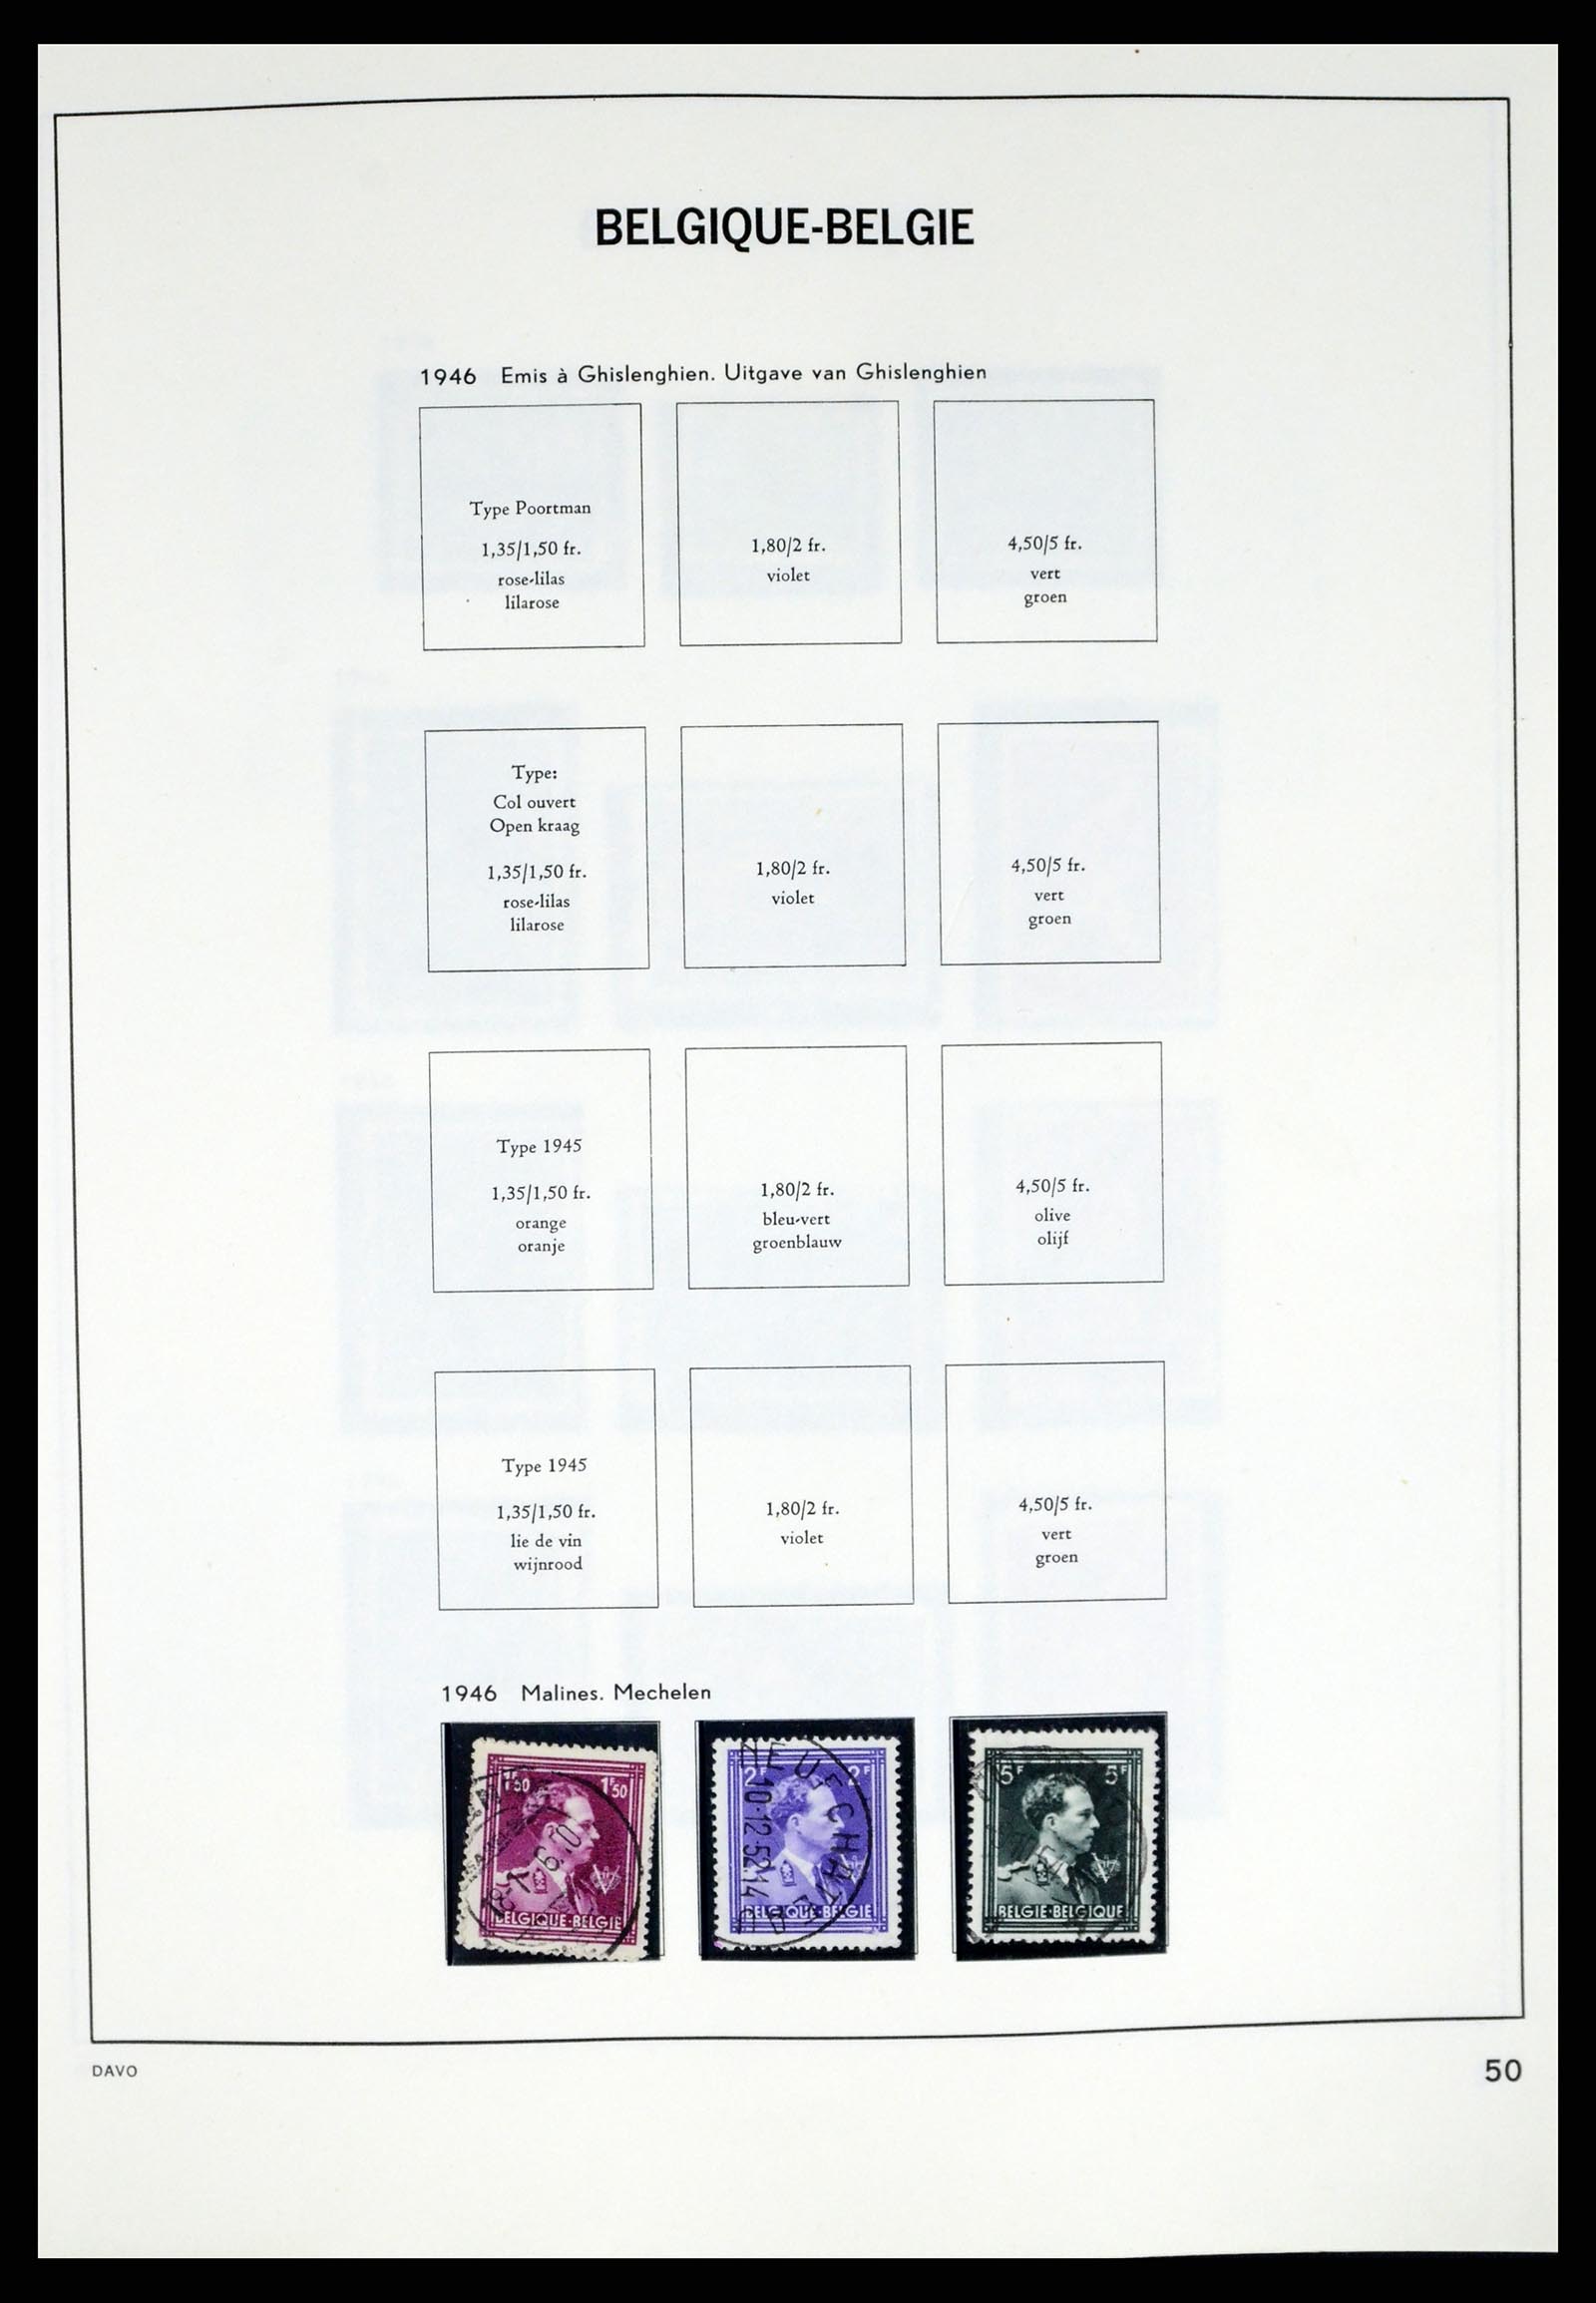 37367 048 - Stamp collection 37367 Belgium 1849-2003.